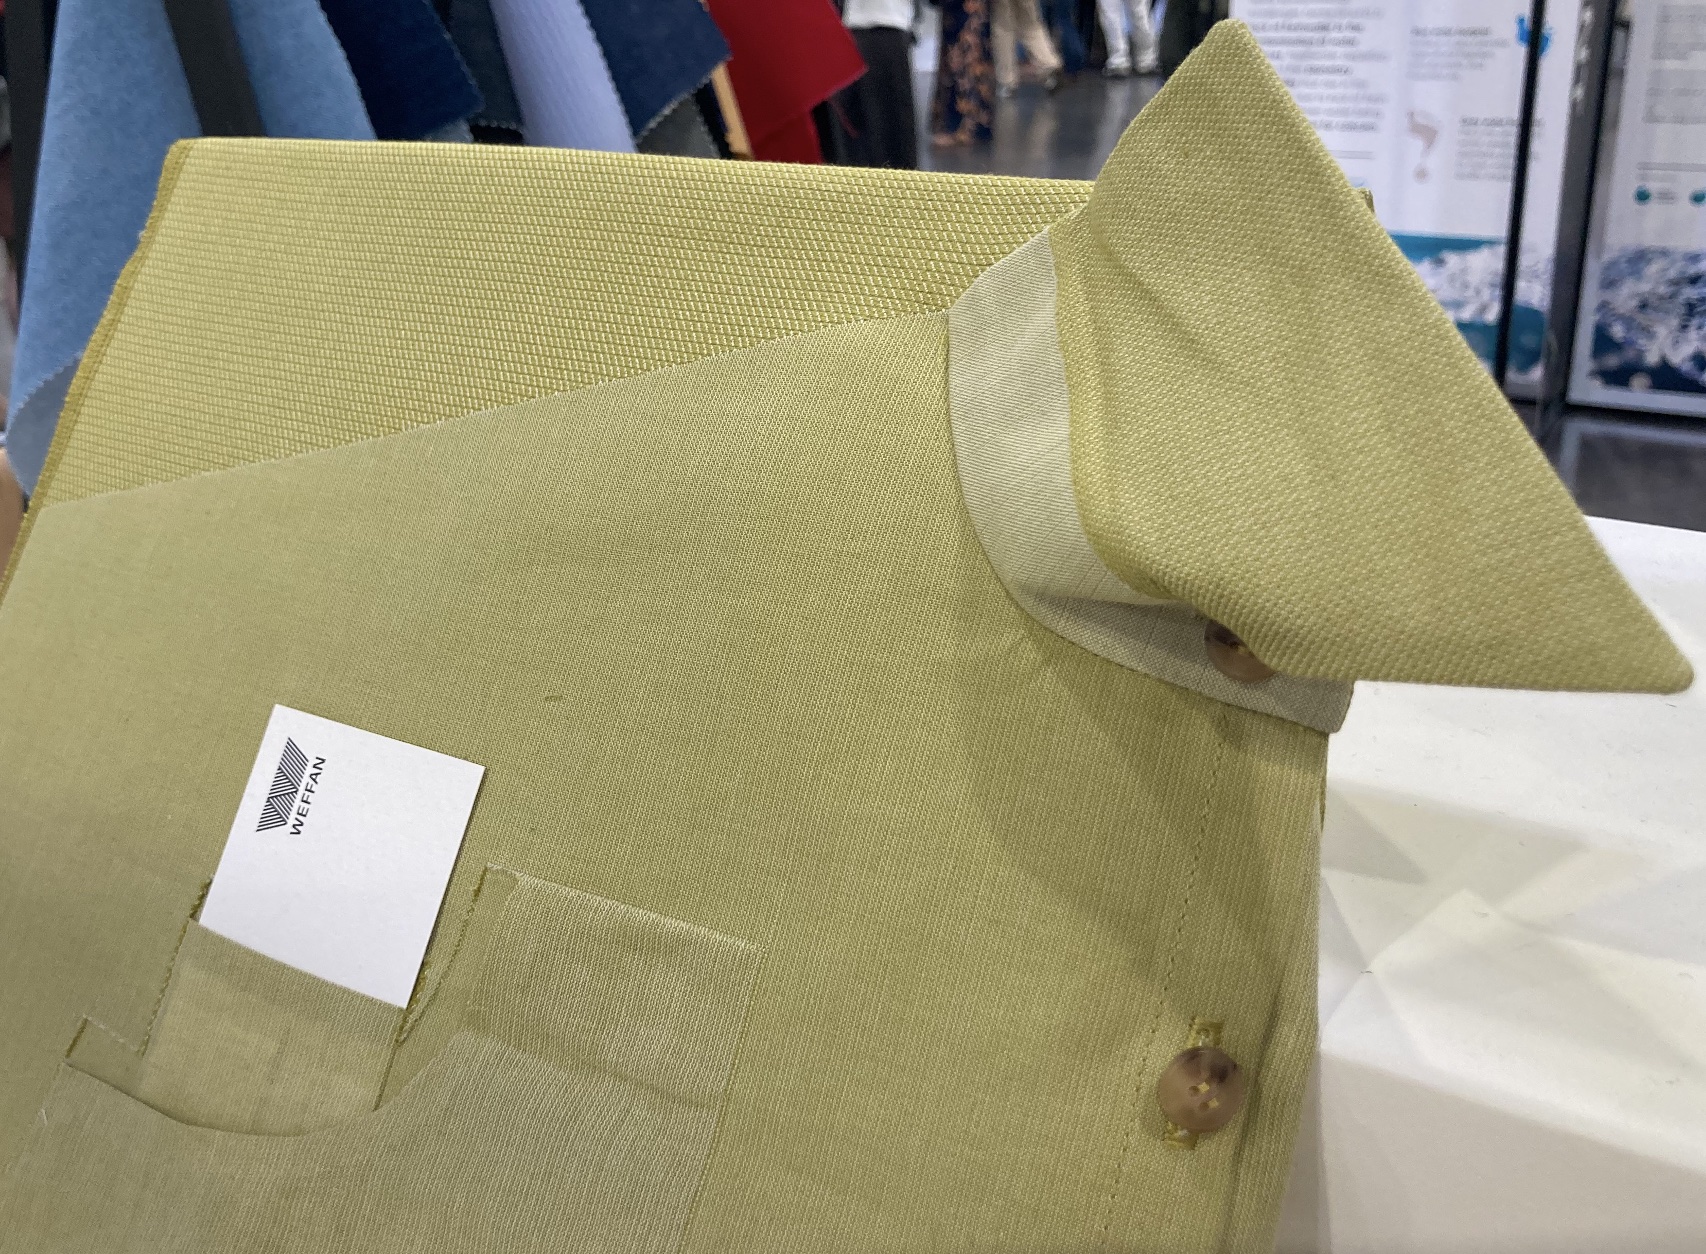 Weffan 3D woven shirt detail at Future Fabrics Expo. © Anne Prahl